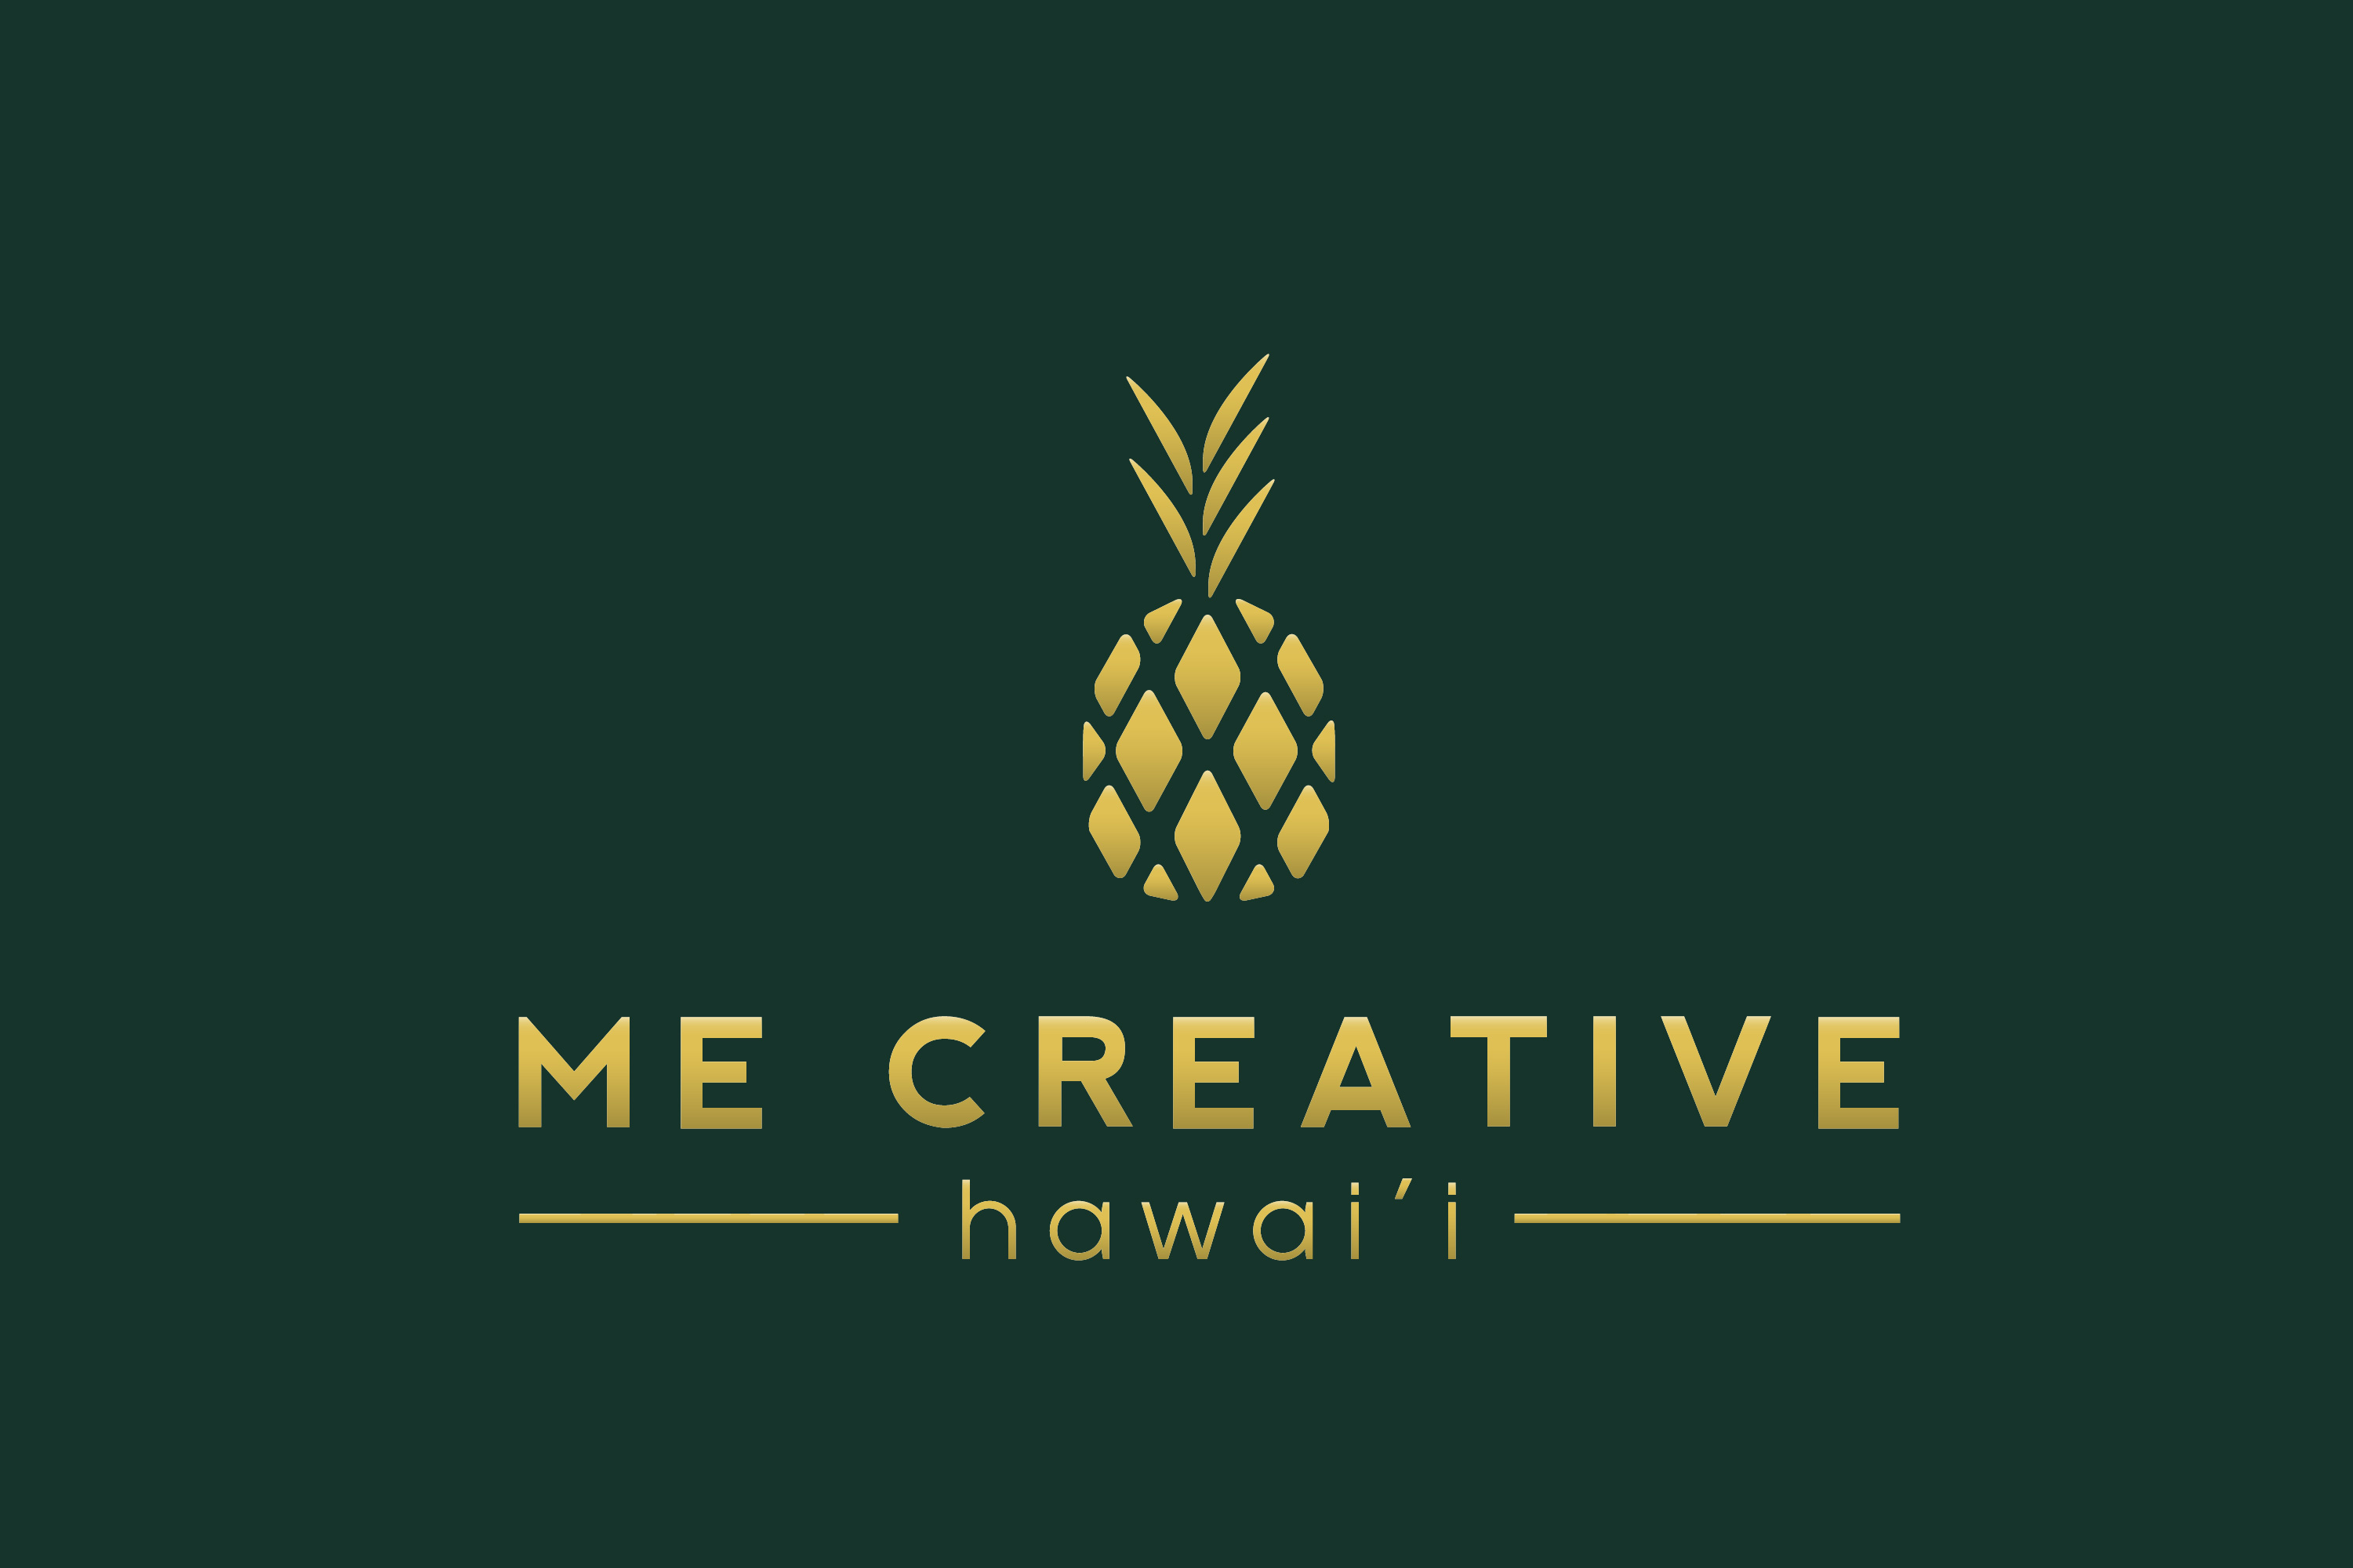 Me Creative Hawaii logo